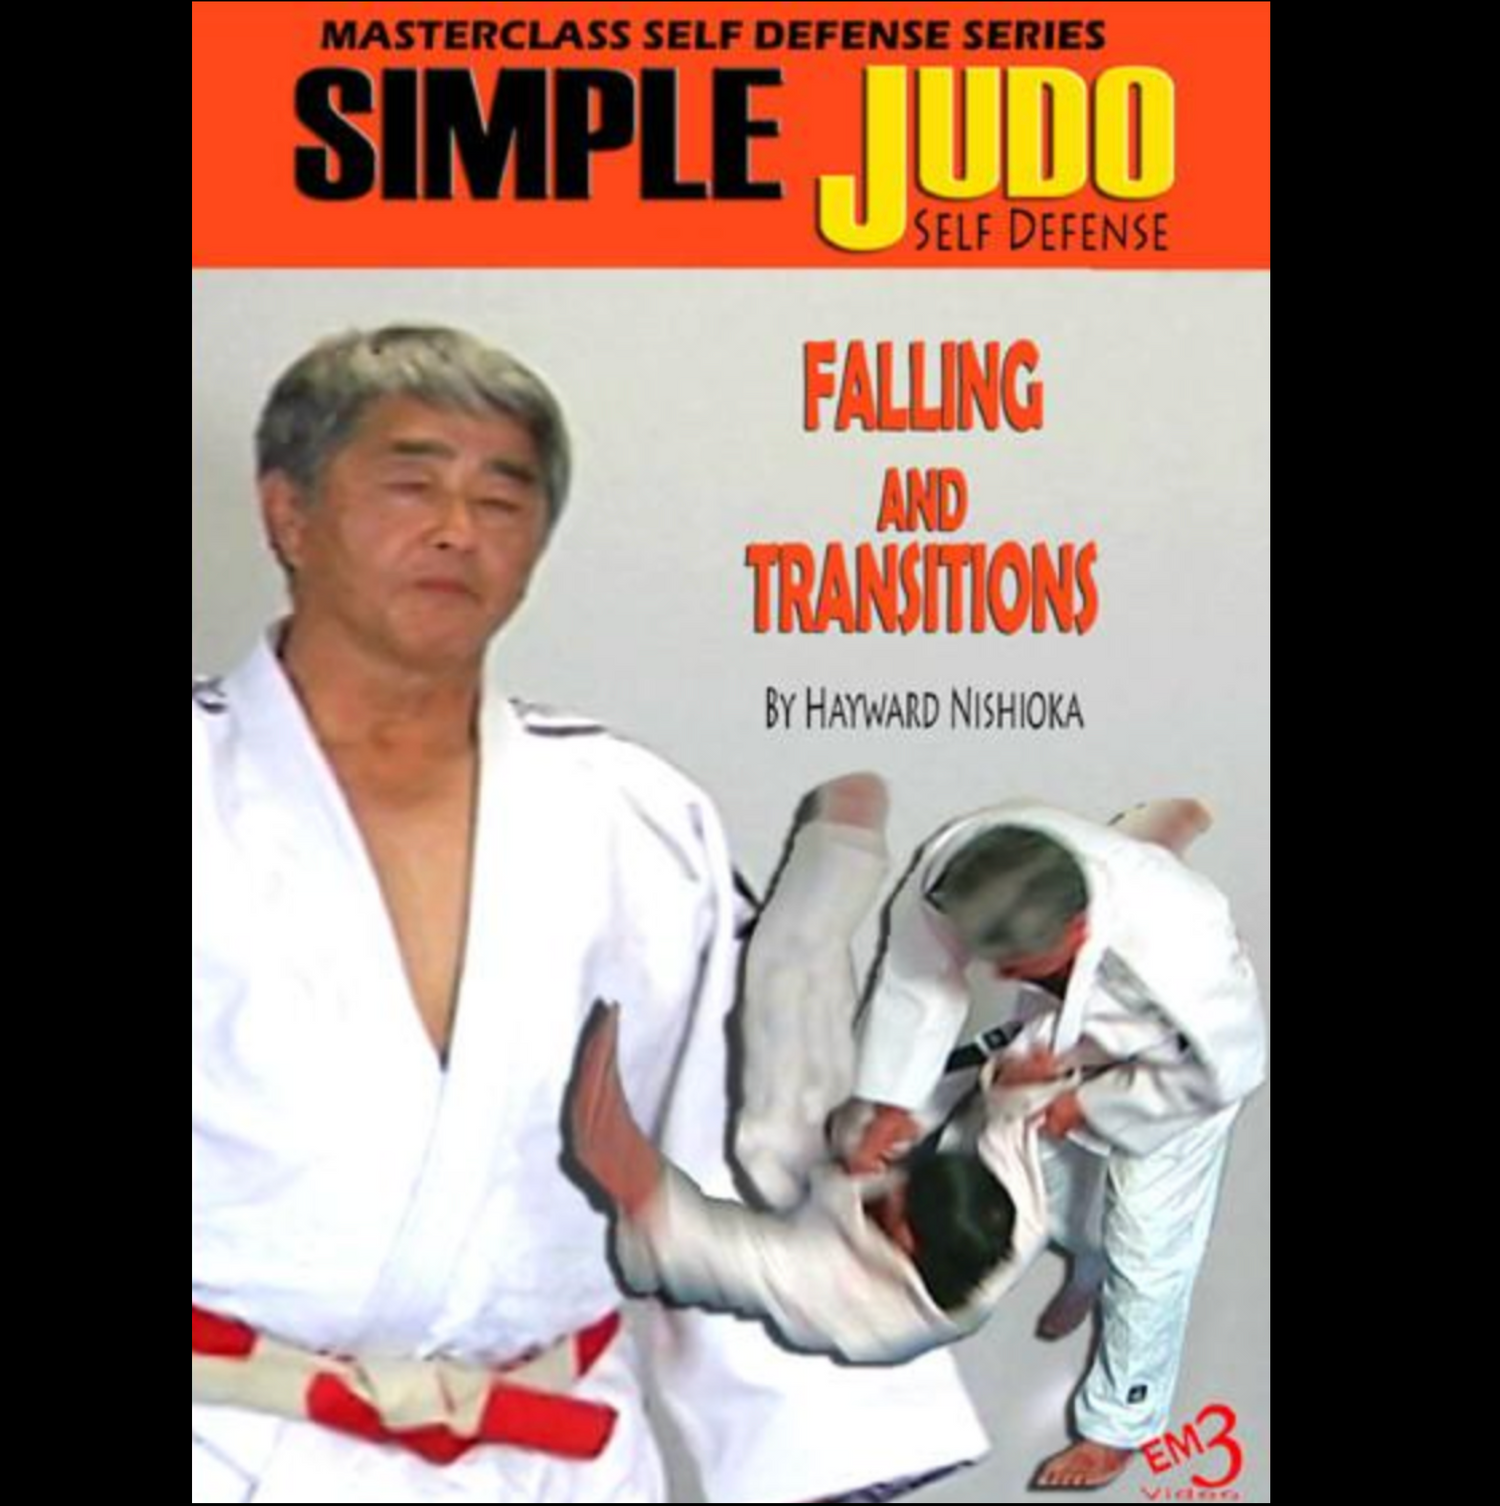 Judo Falling & Transitions with Hayward Nishioka (On Demand)